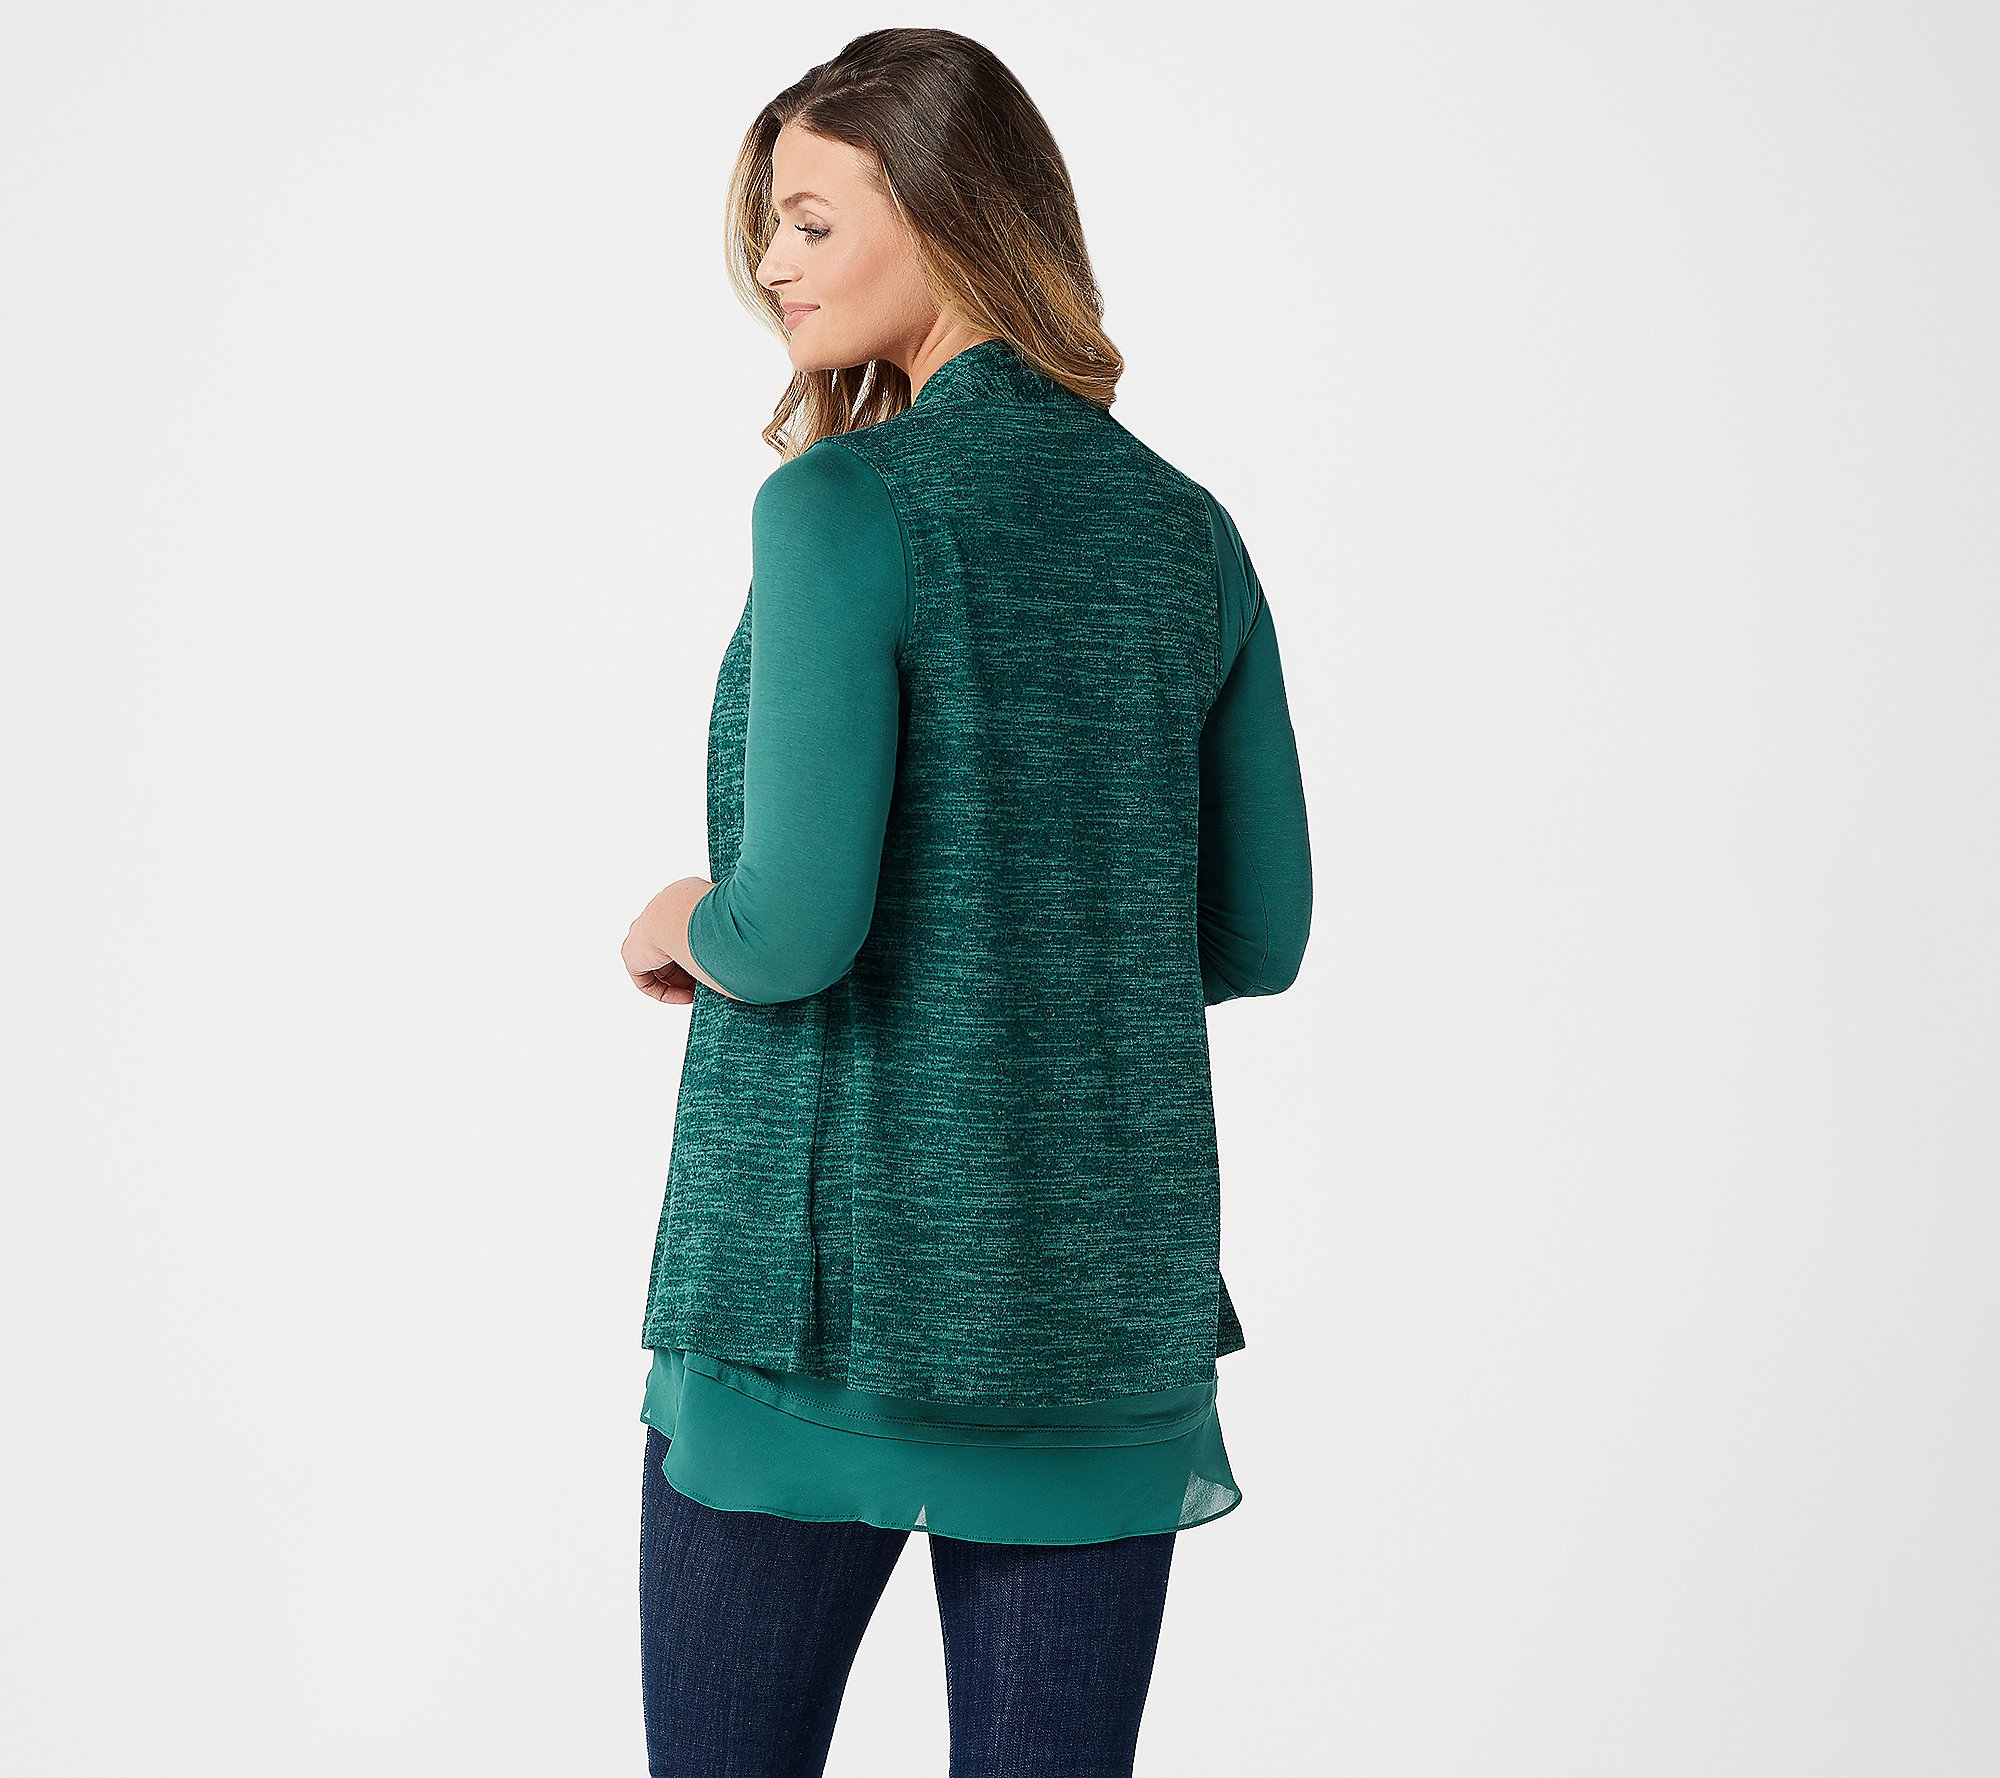 Logo Lori Goldstein Sweater Knit Mock Neck Top Lace Hem A294489 